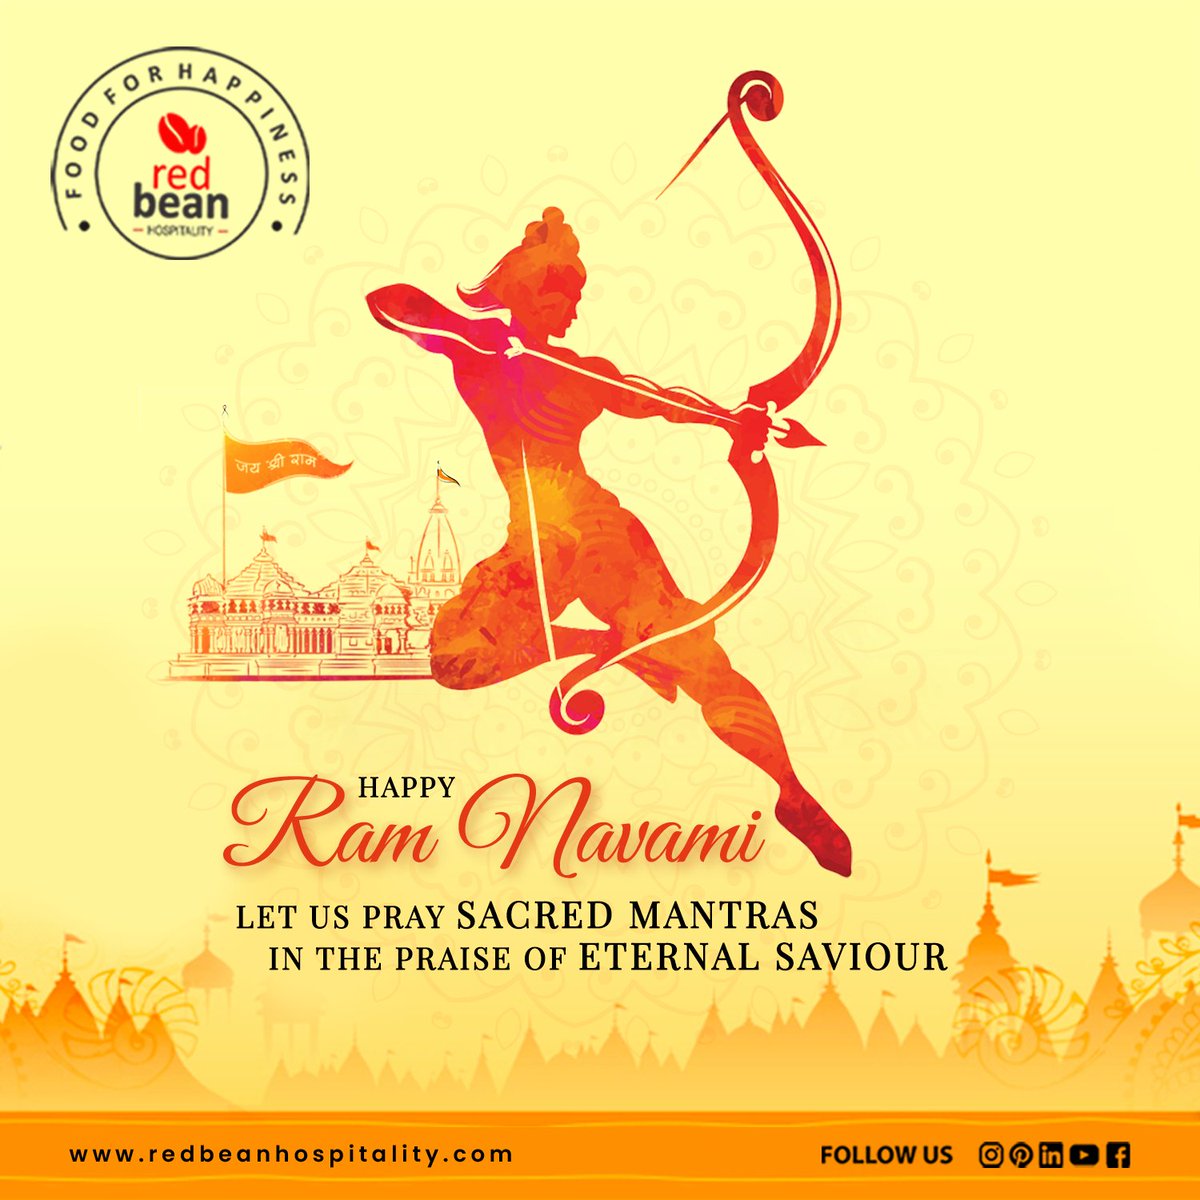 Praising the eternal savior with sacred mantras on this auspicious Ram Navami. 🙏 

Happy Ram Navami!

#ramnavami #ram #jaishreeram #ramayana #india #lordrama #ramnavmi #hinduism #sita #ramji #hanumanji #jaisriram #RedbeanHospitality #Hospitalcatering #Healthcarecatering